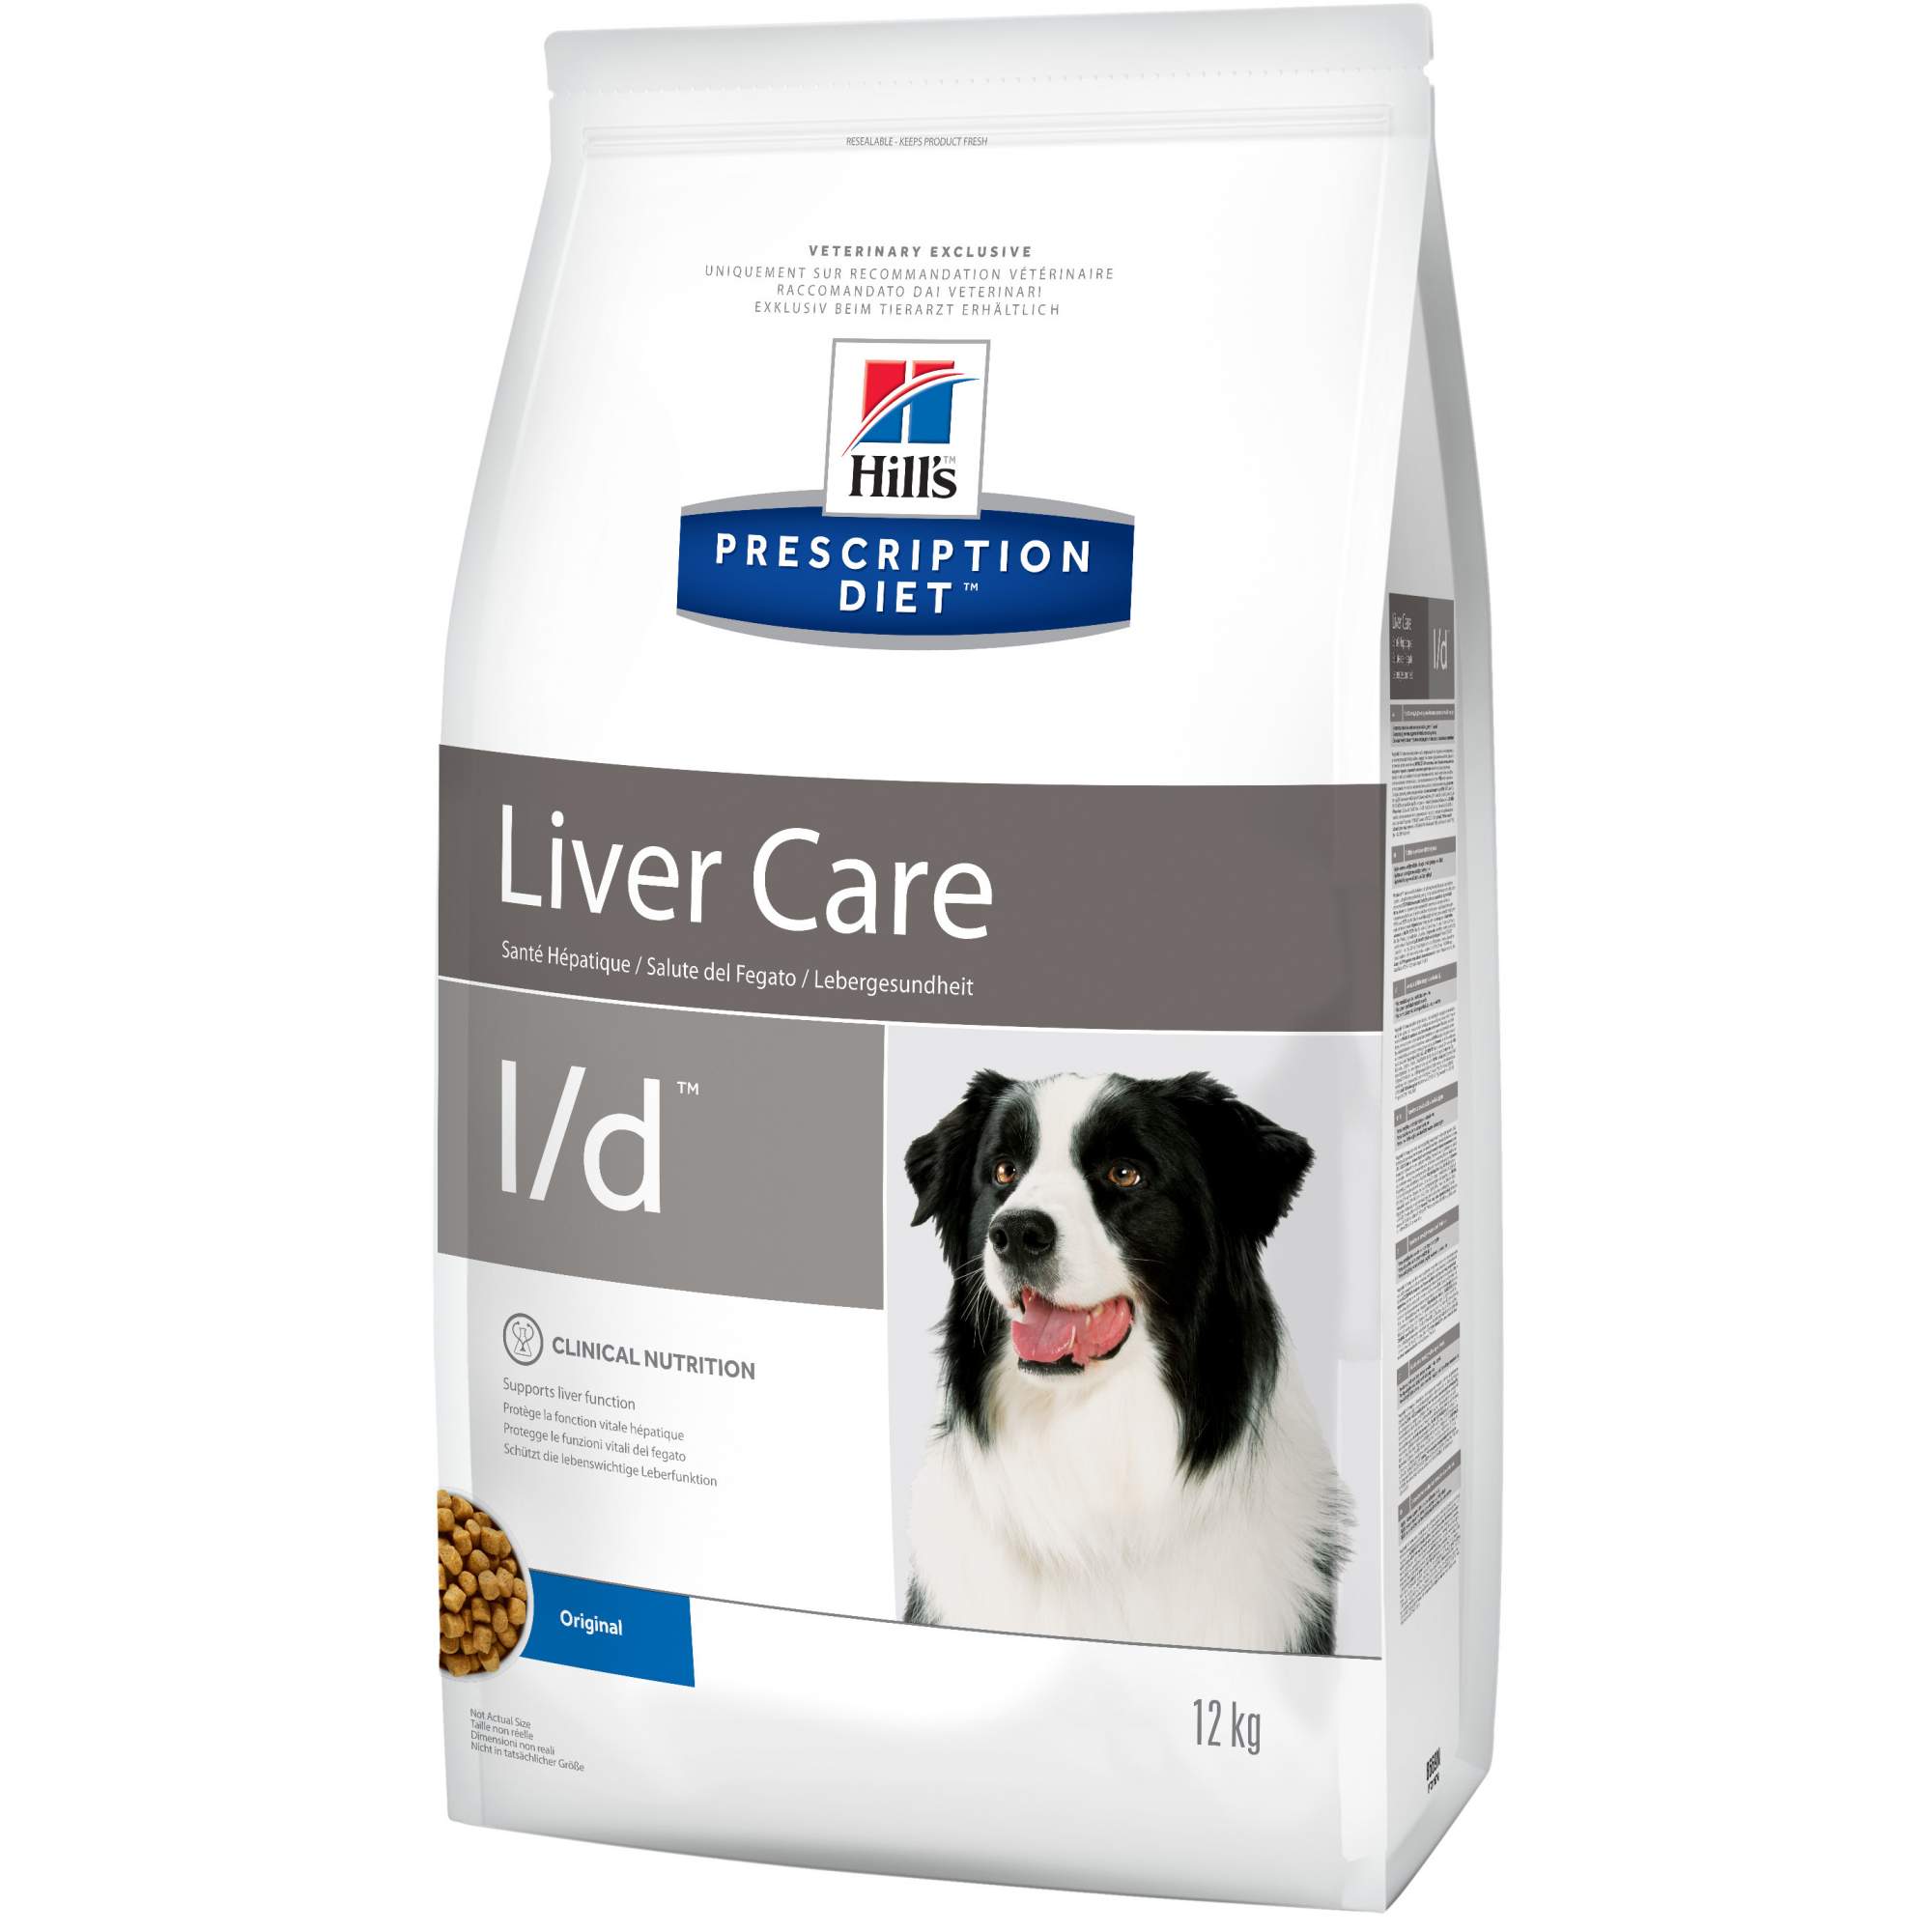 Корм для собак hills d d купить. Hill's Prescription Diet l/d canine. Hill's Prescription Diet для собак. Liver Care l/d для собак. Hills u/d canine для собак.